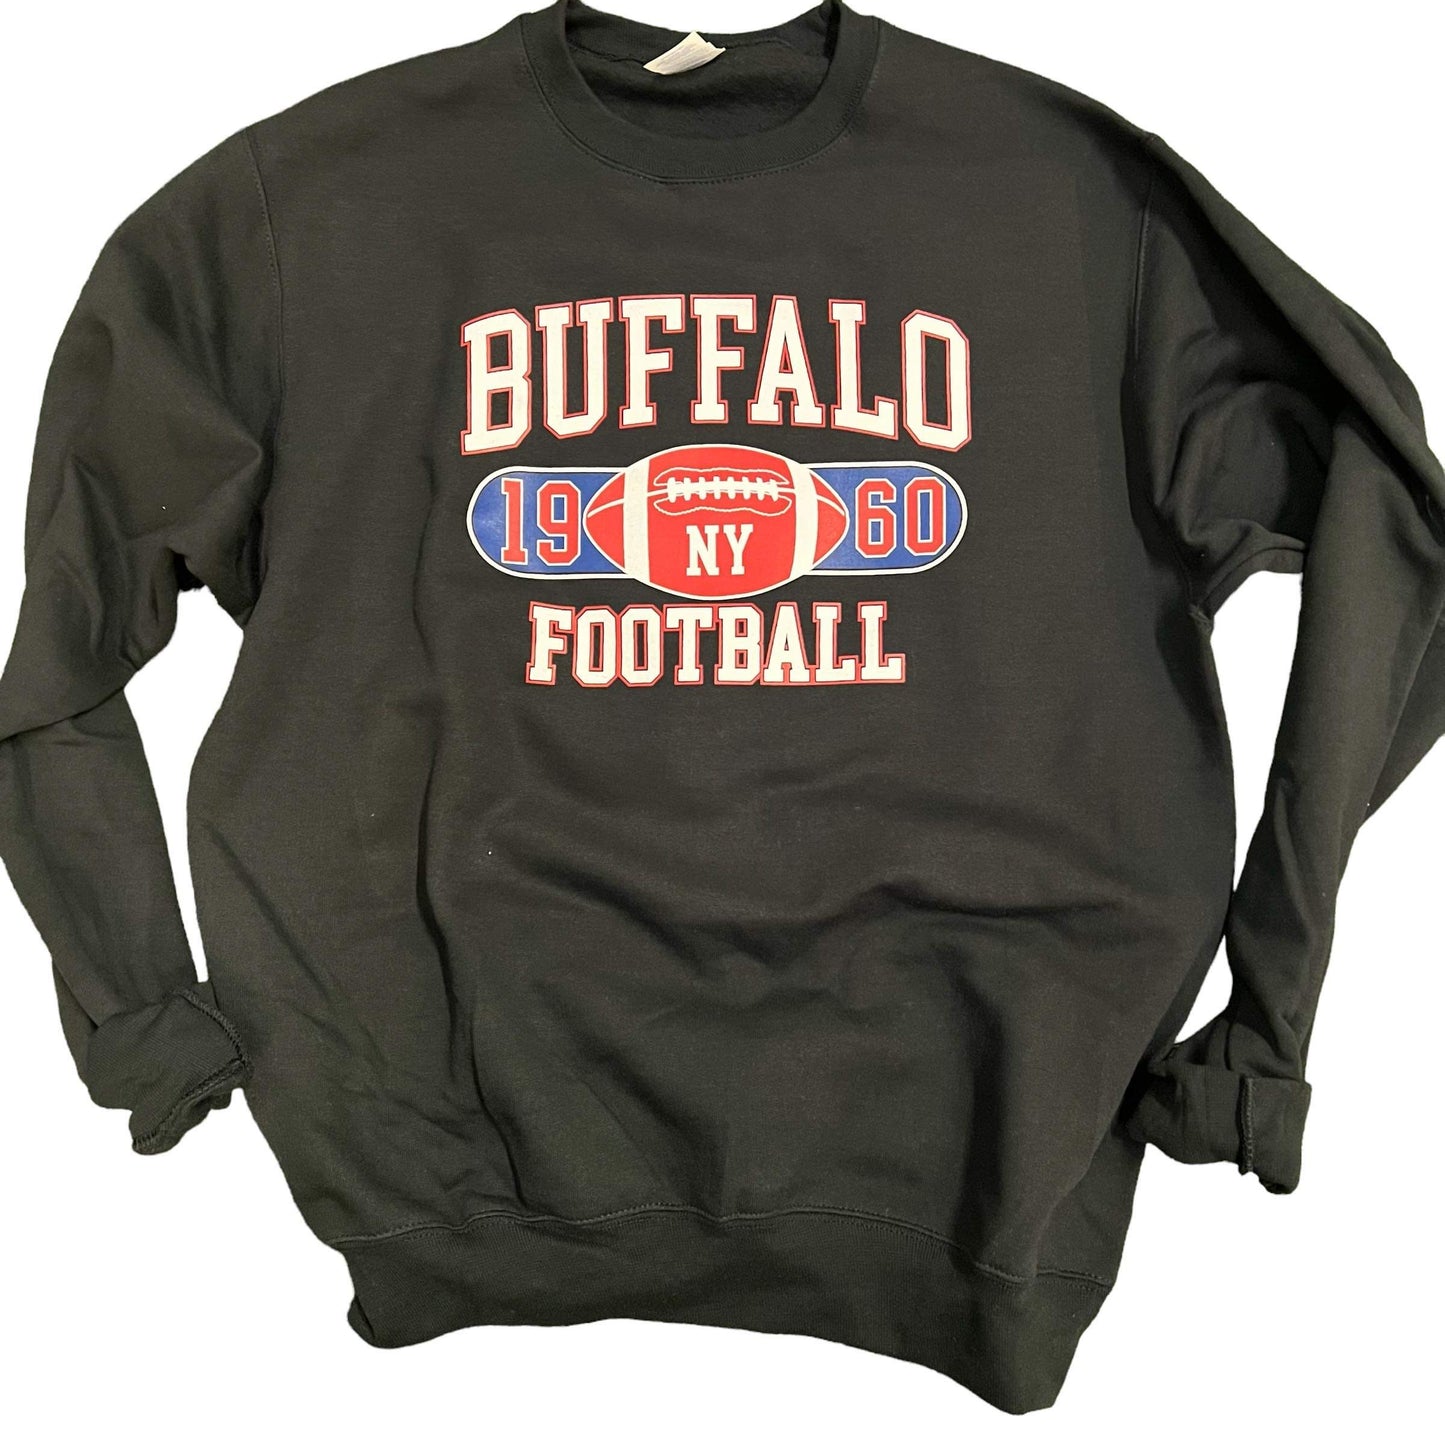 1960 Buffalo Football